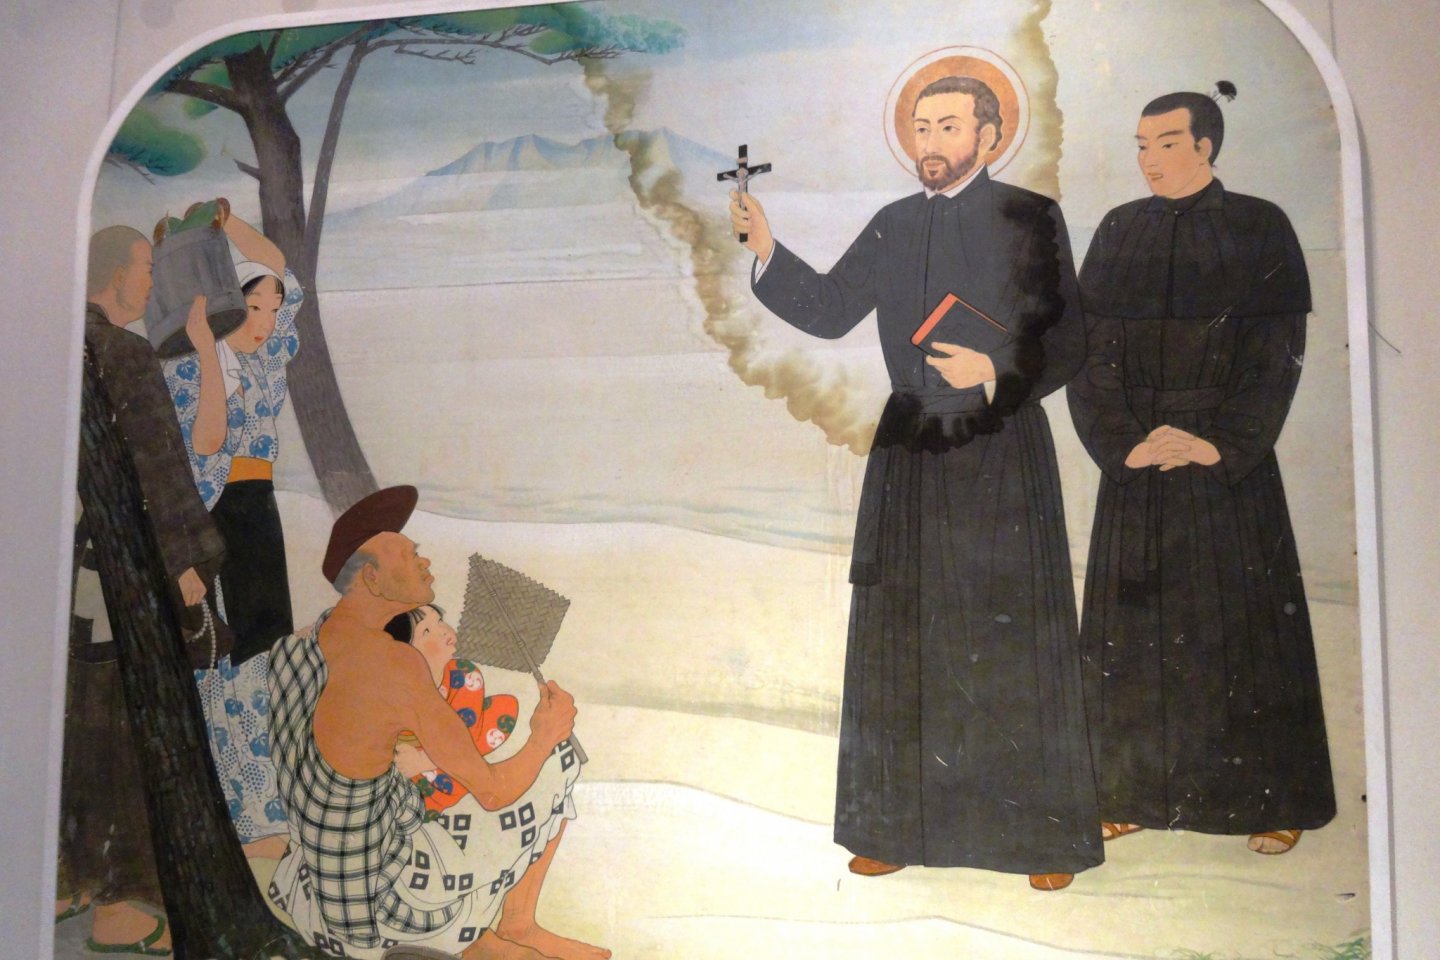 A mural of St Francis Xavier preaching in Japan